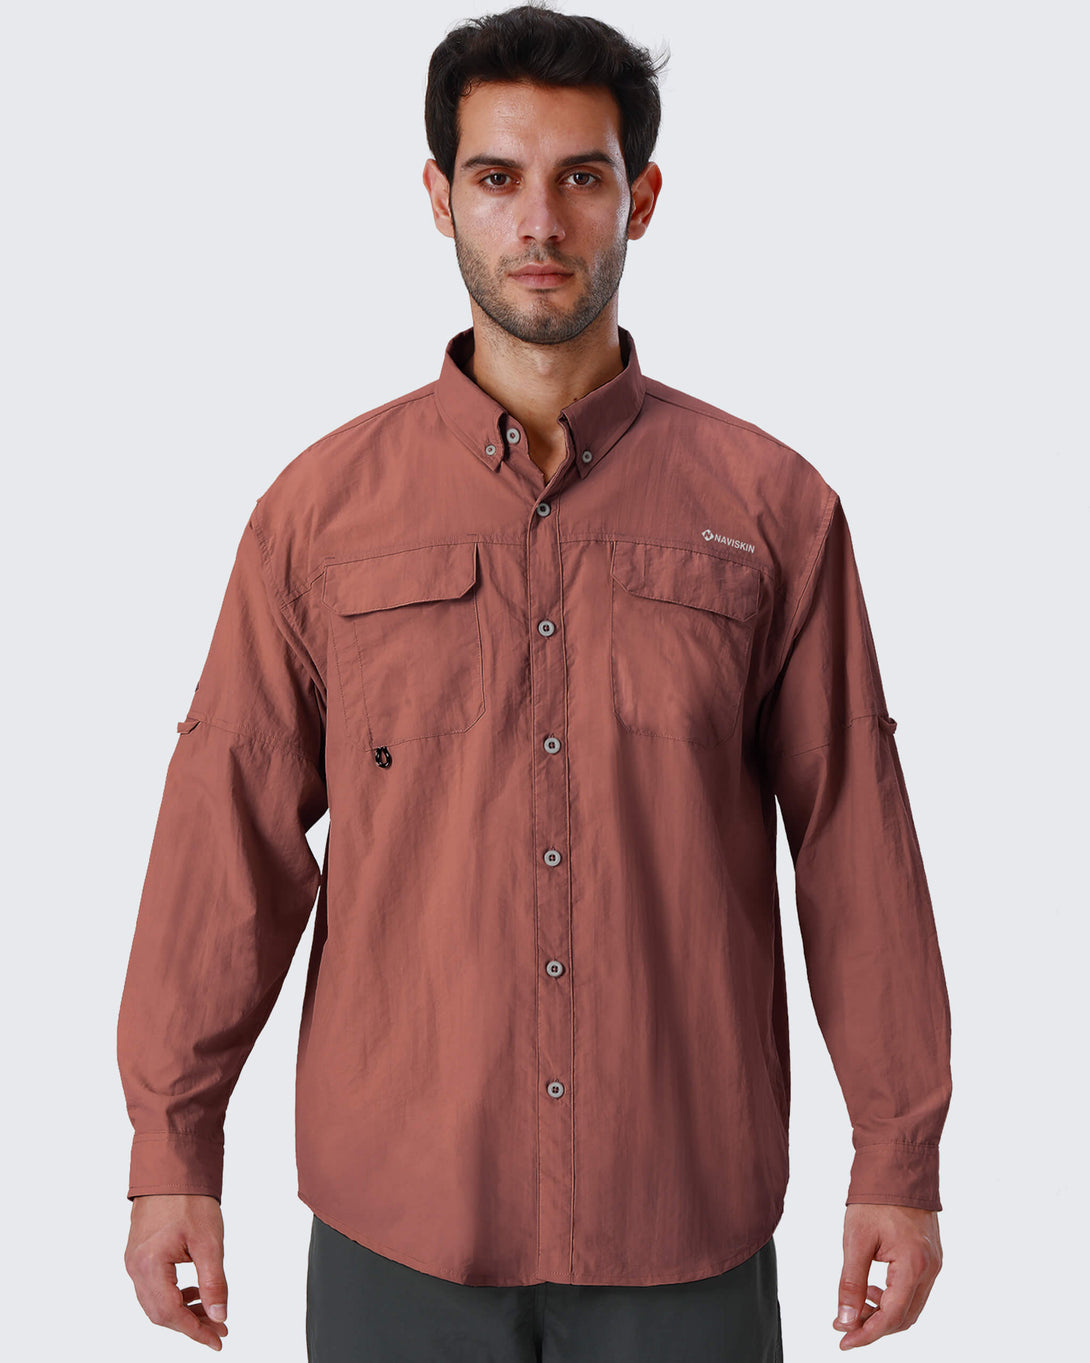 NAVISKIN Men's Sun Protection Fishing Shirts UPF 50+ Long Sleeve Sun Shirts  for Men PFG Hiking Travel Shirts Grey Size L - ShopStyle T-shirts